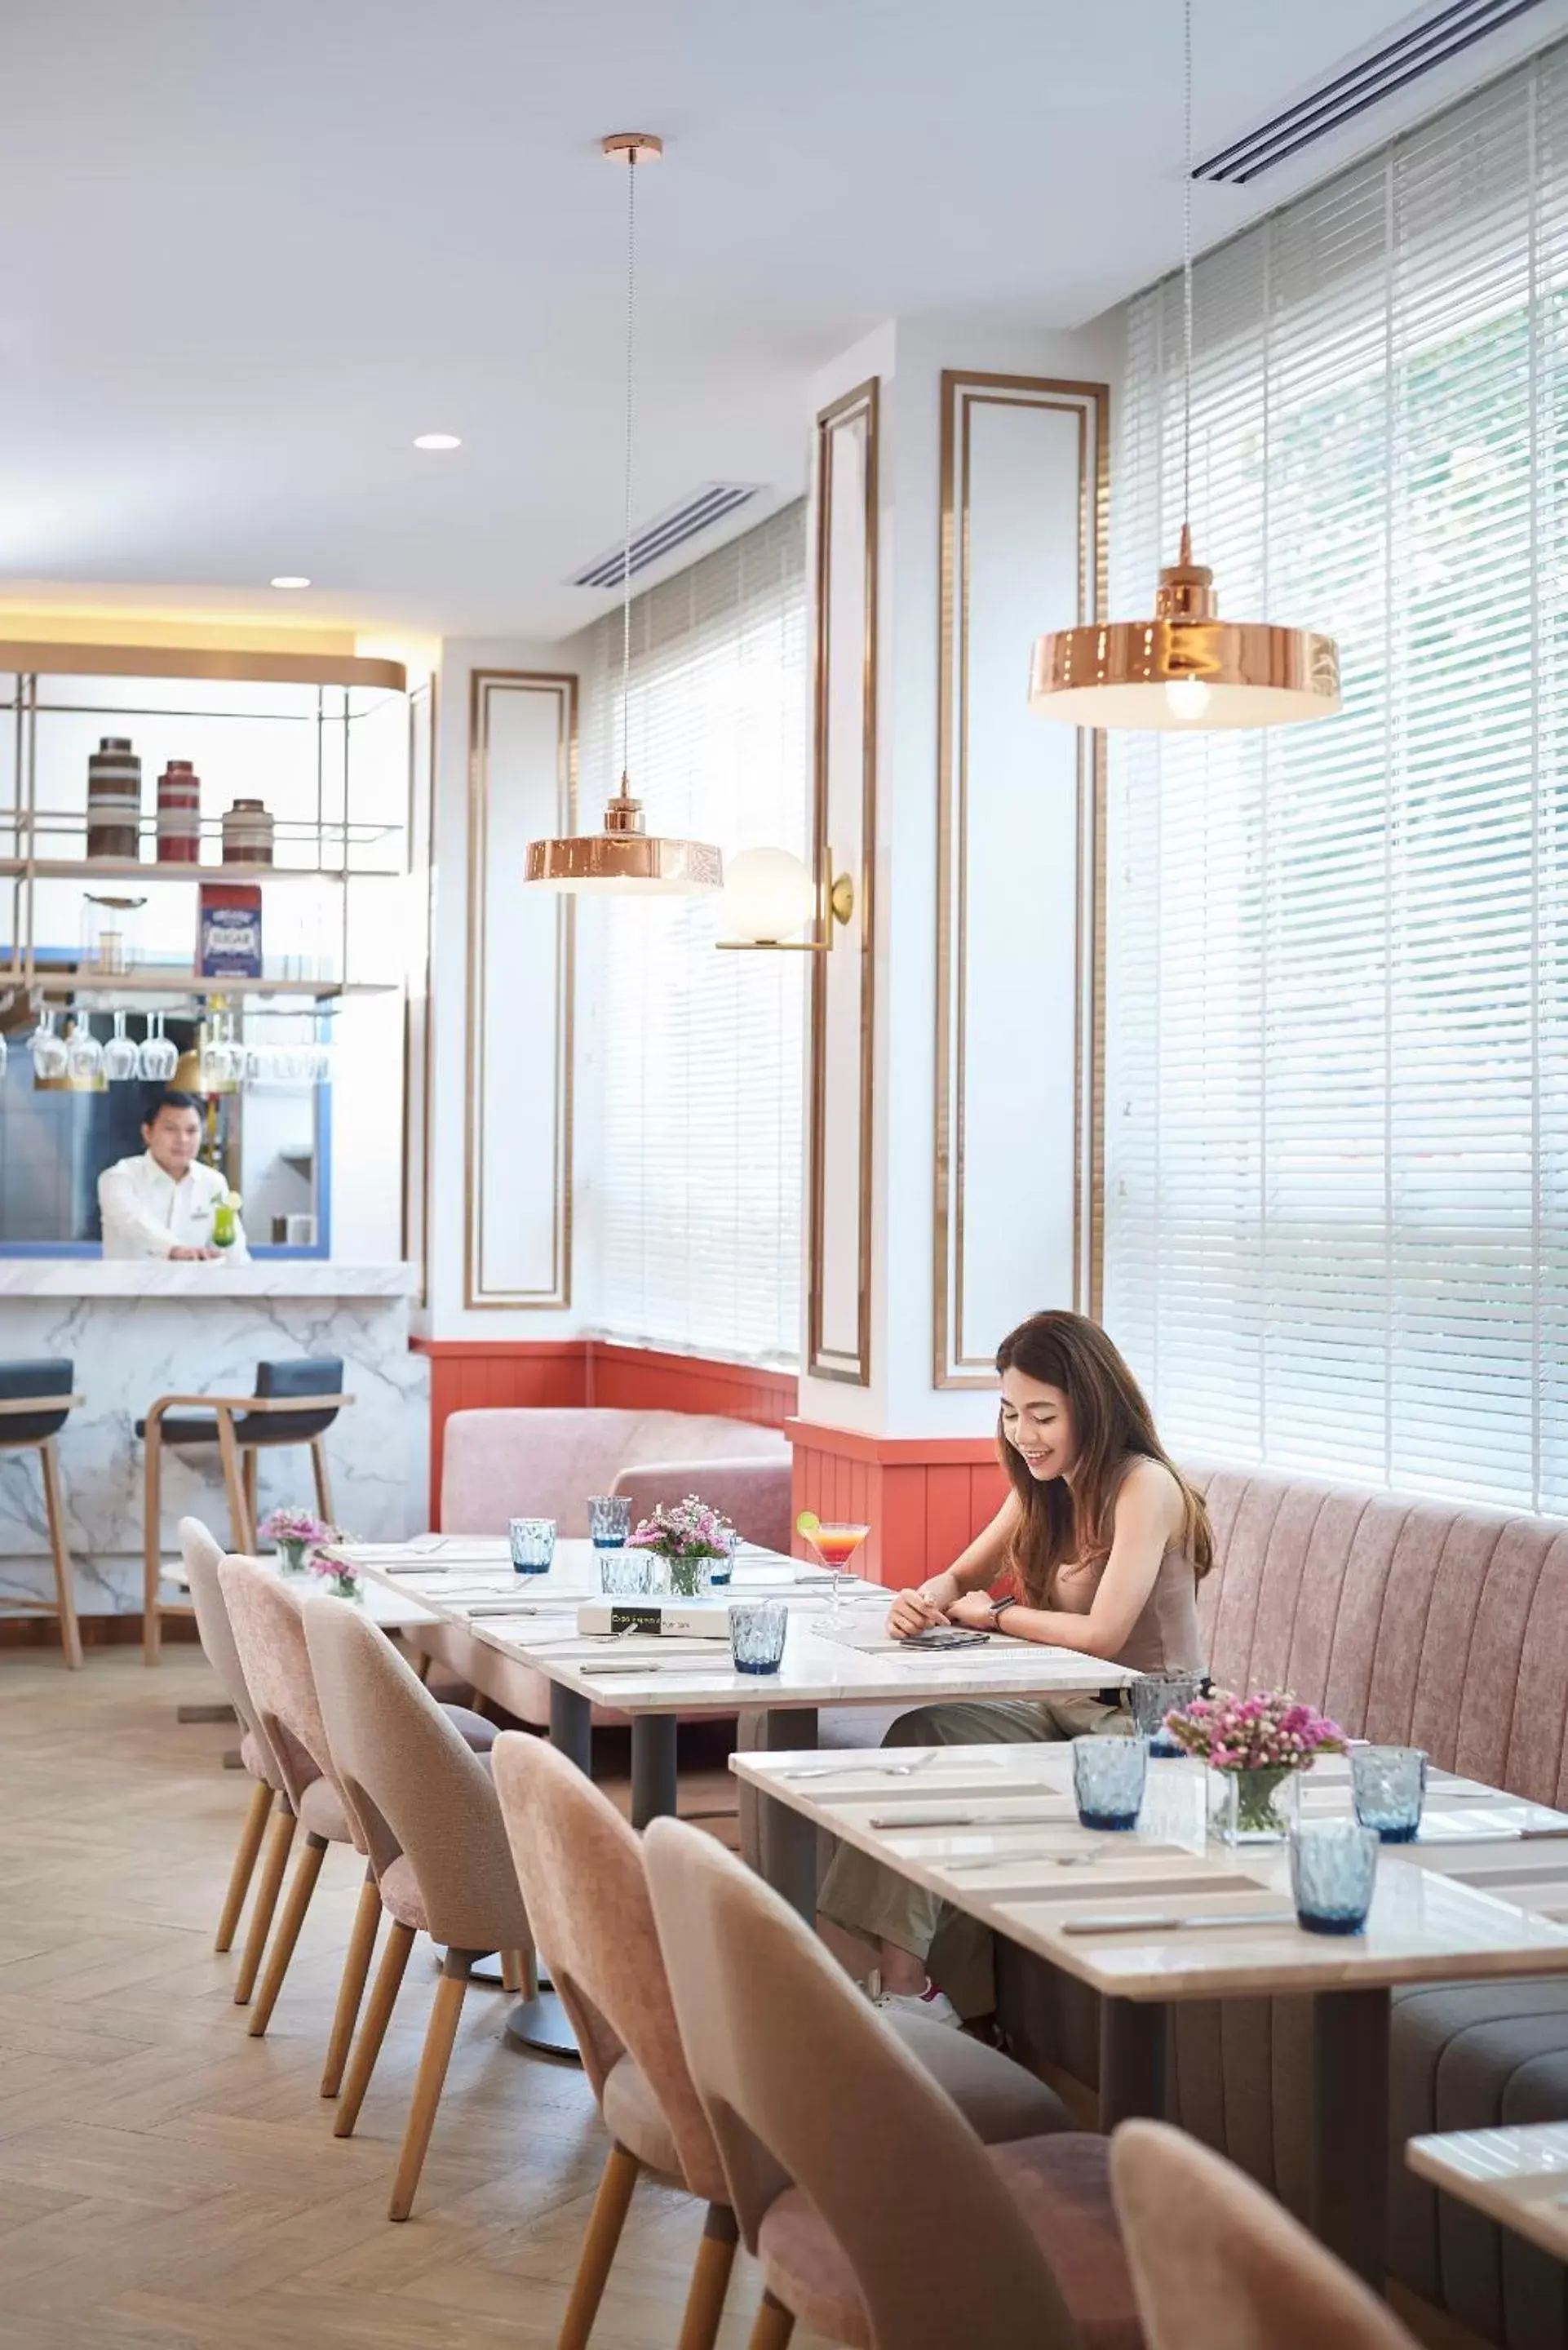 Staff, Restaurant/Places to Eat in Amari Don Muang Airport Bangkok